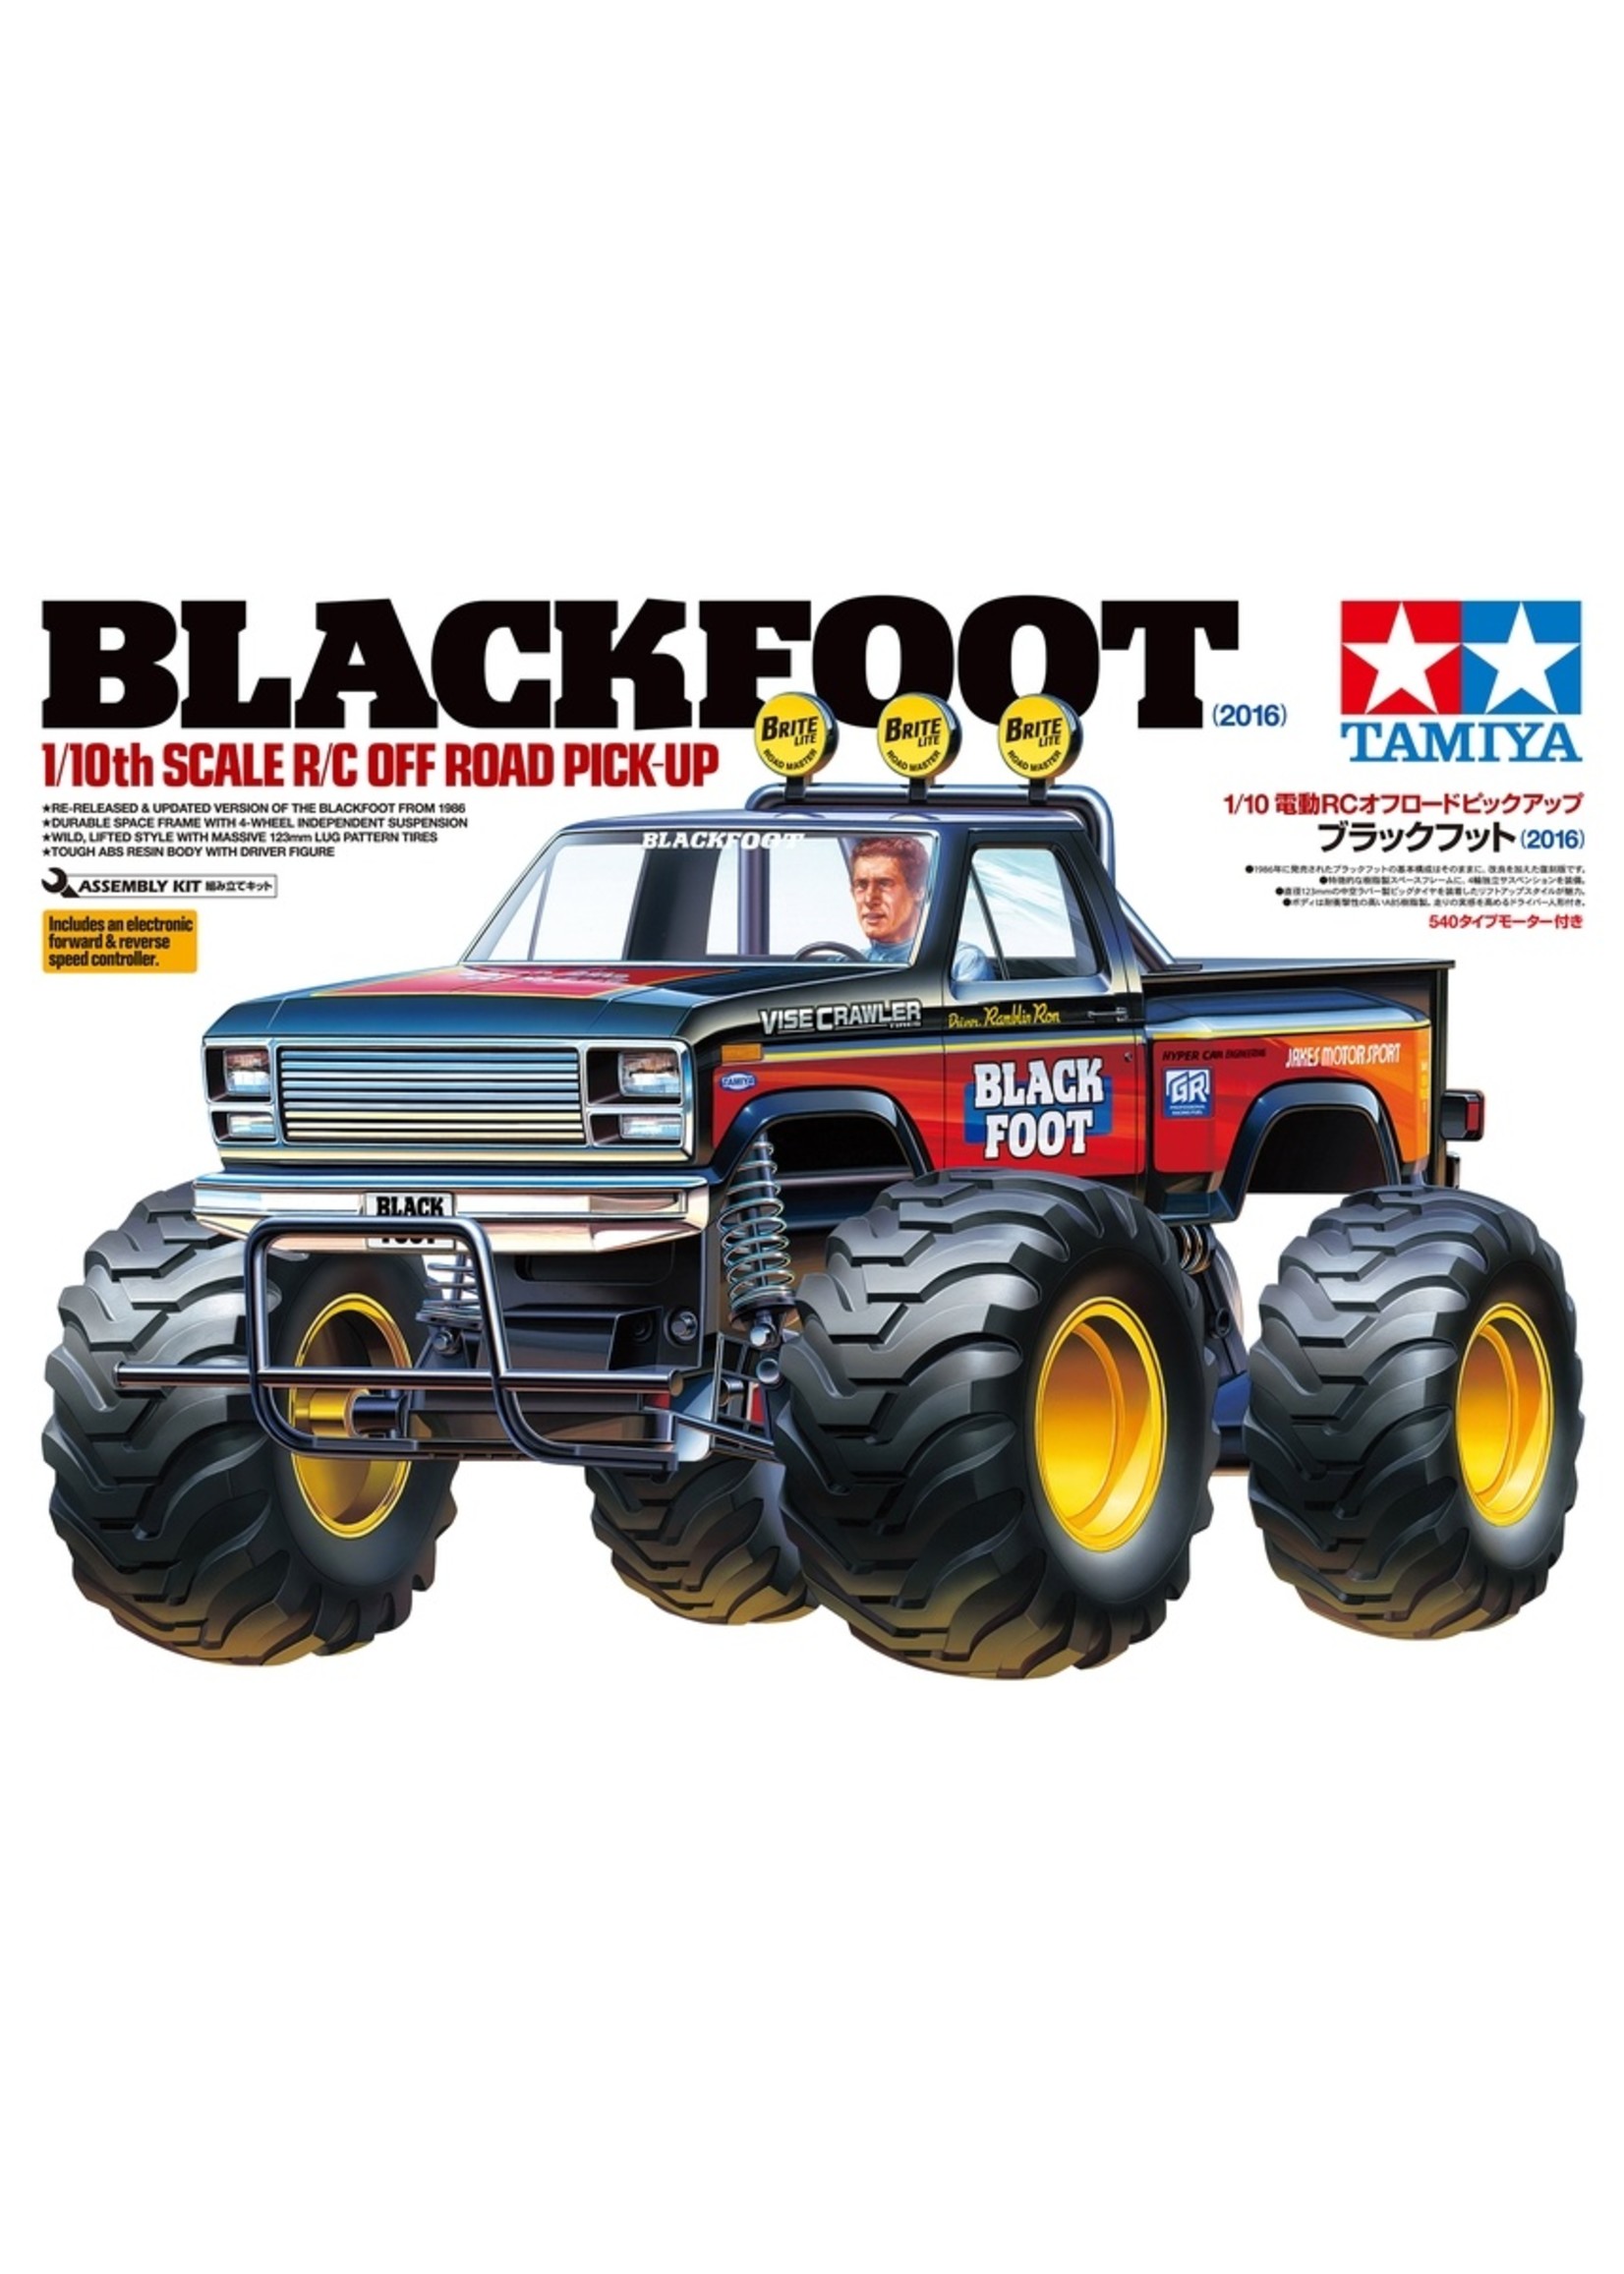 Tamiya 1/10 Blackfoot 2WD 2016 Kit